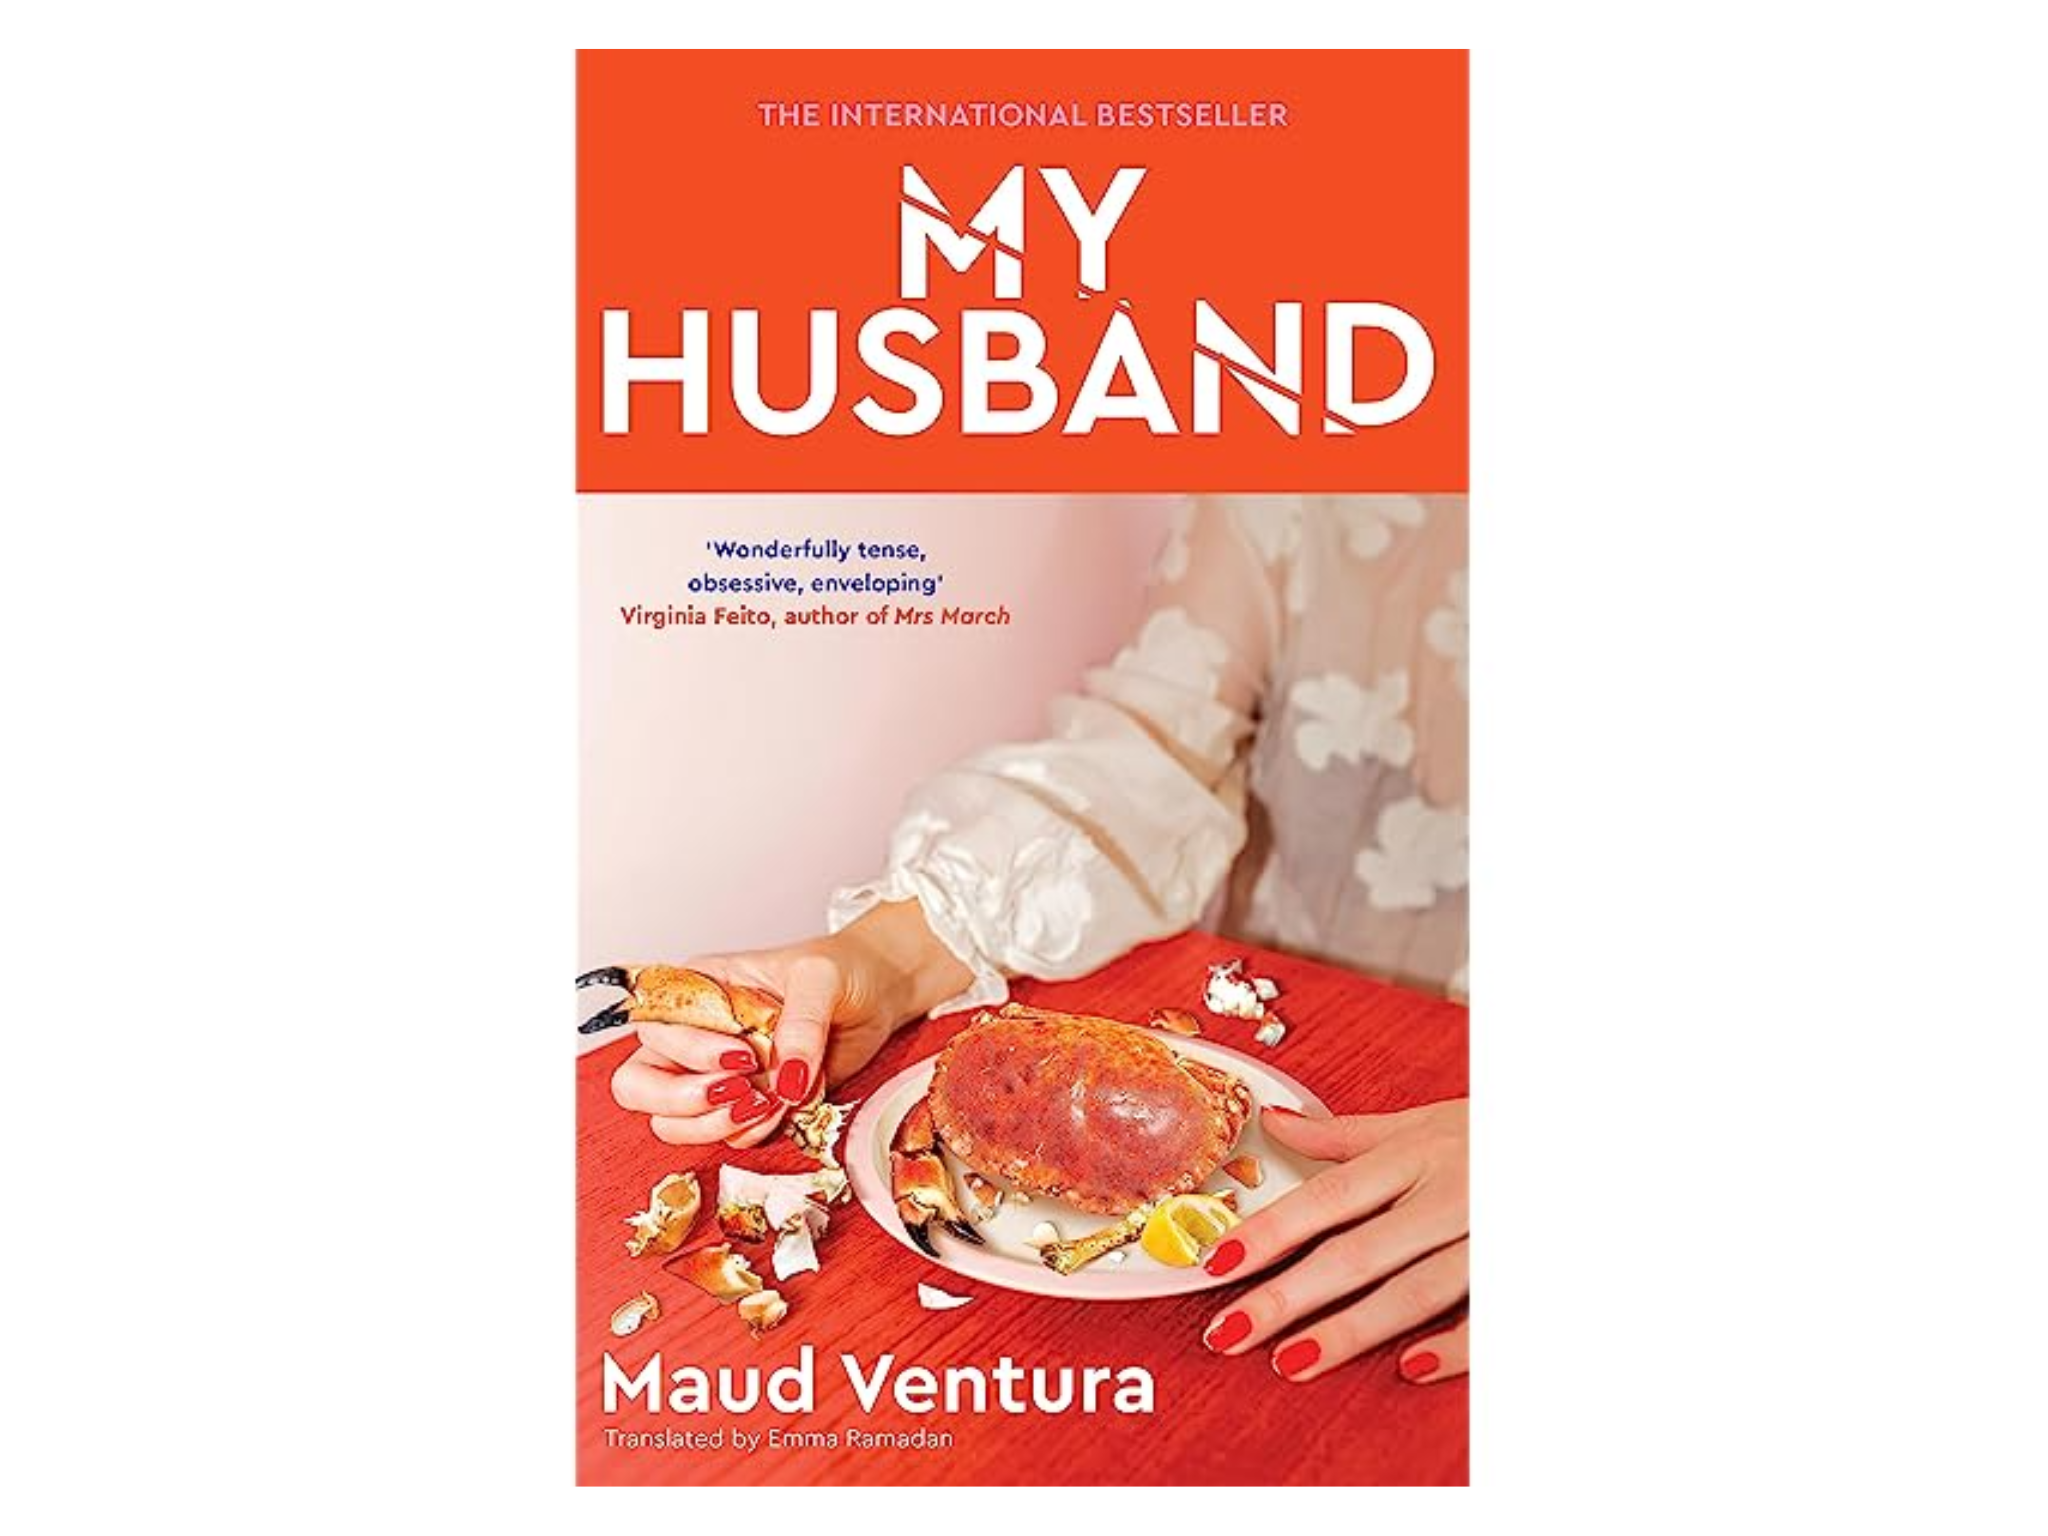 My Husband by Maud Ventura